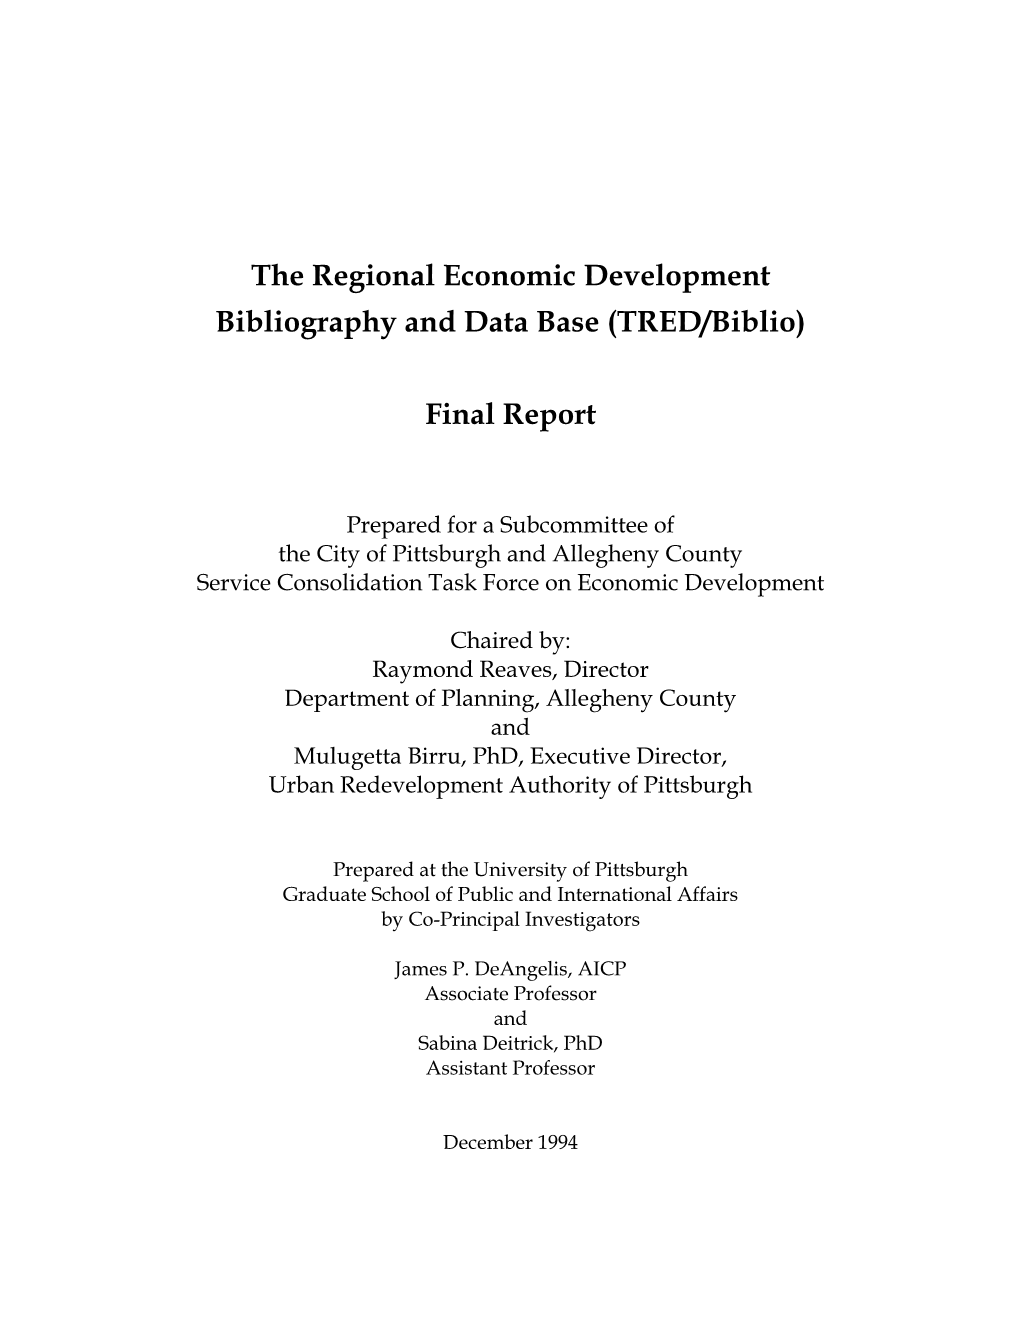 The Regional Economic Development Bibliography and Data Base (TRED/Biblio)